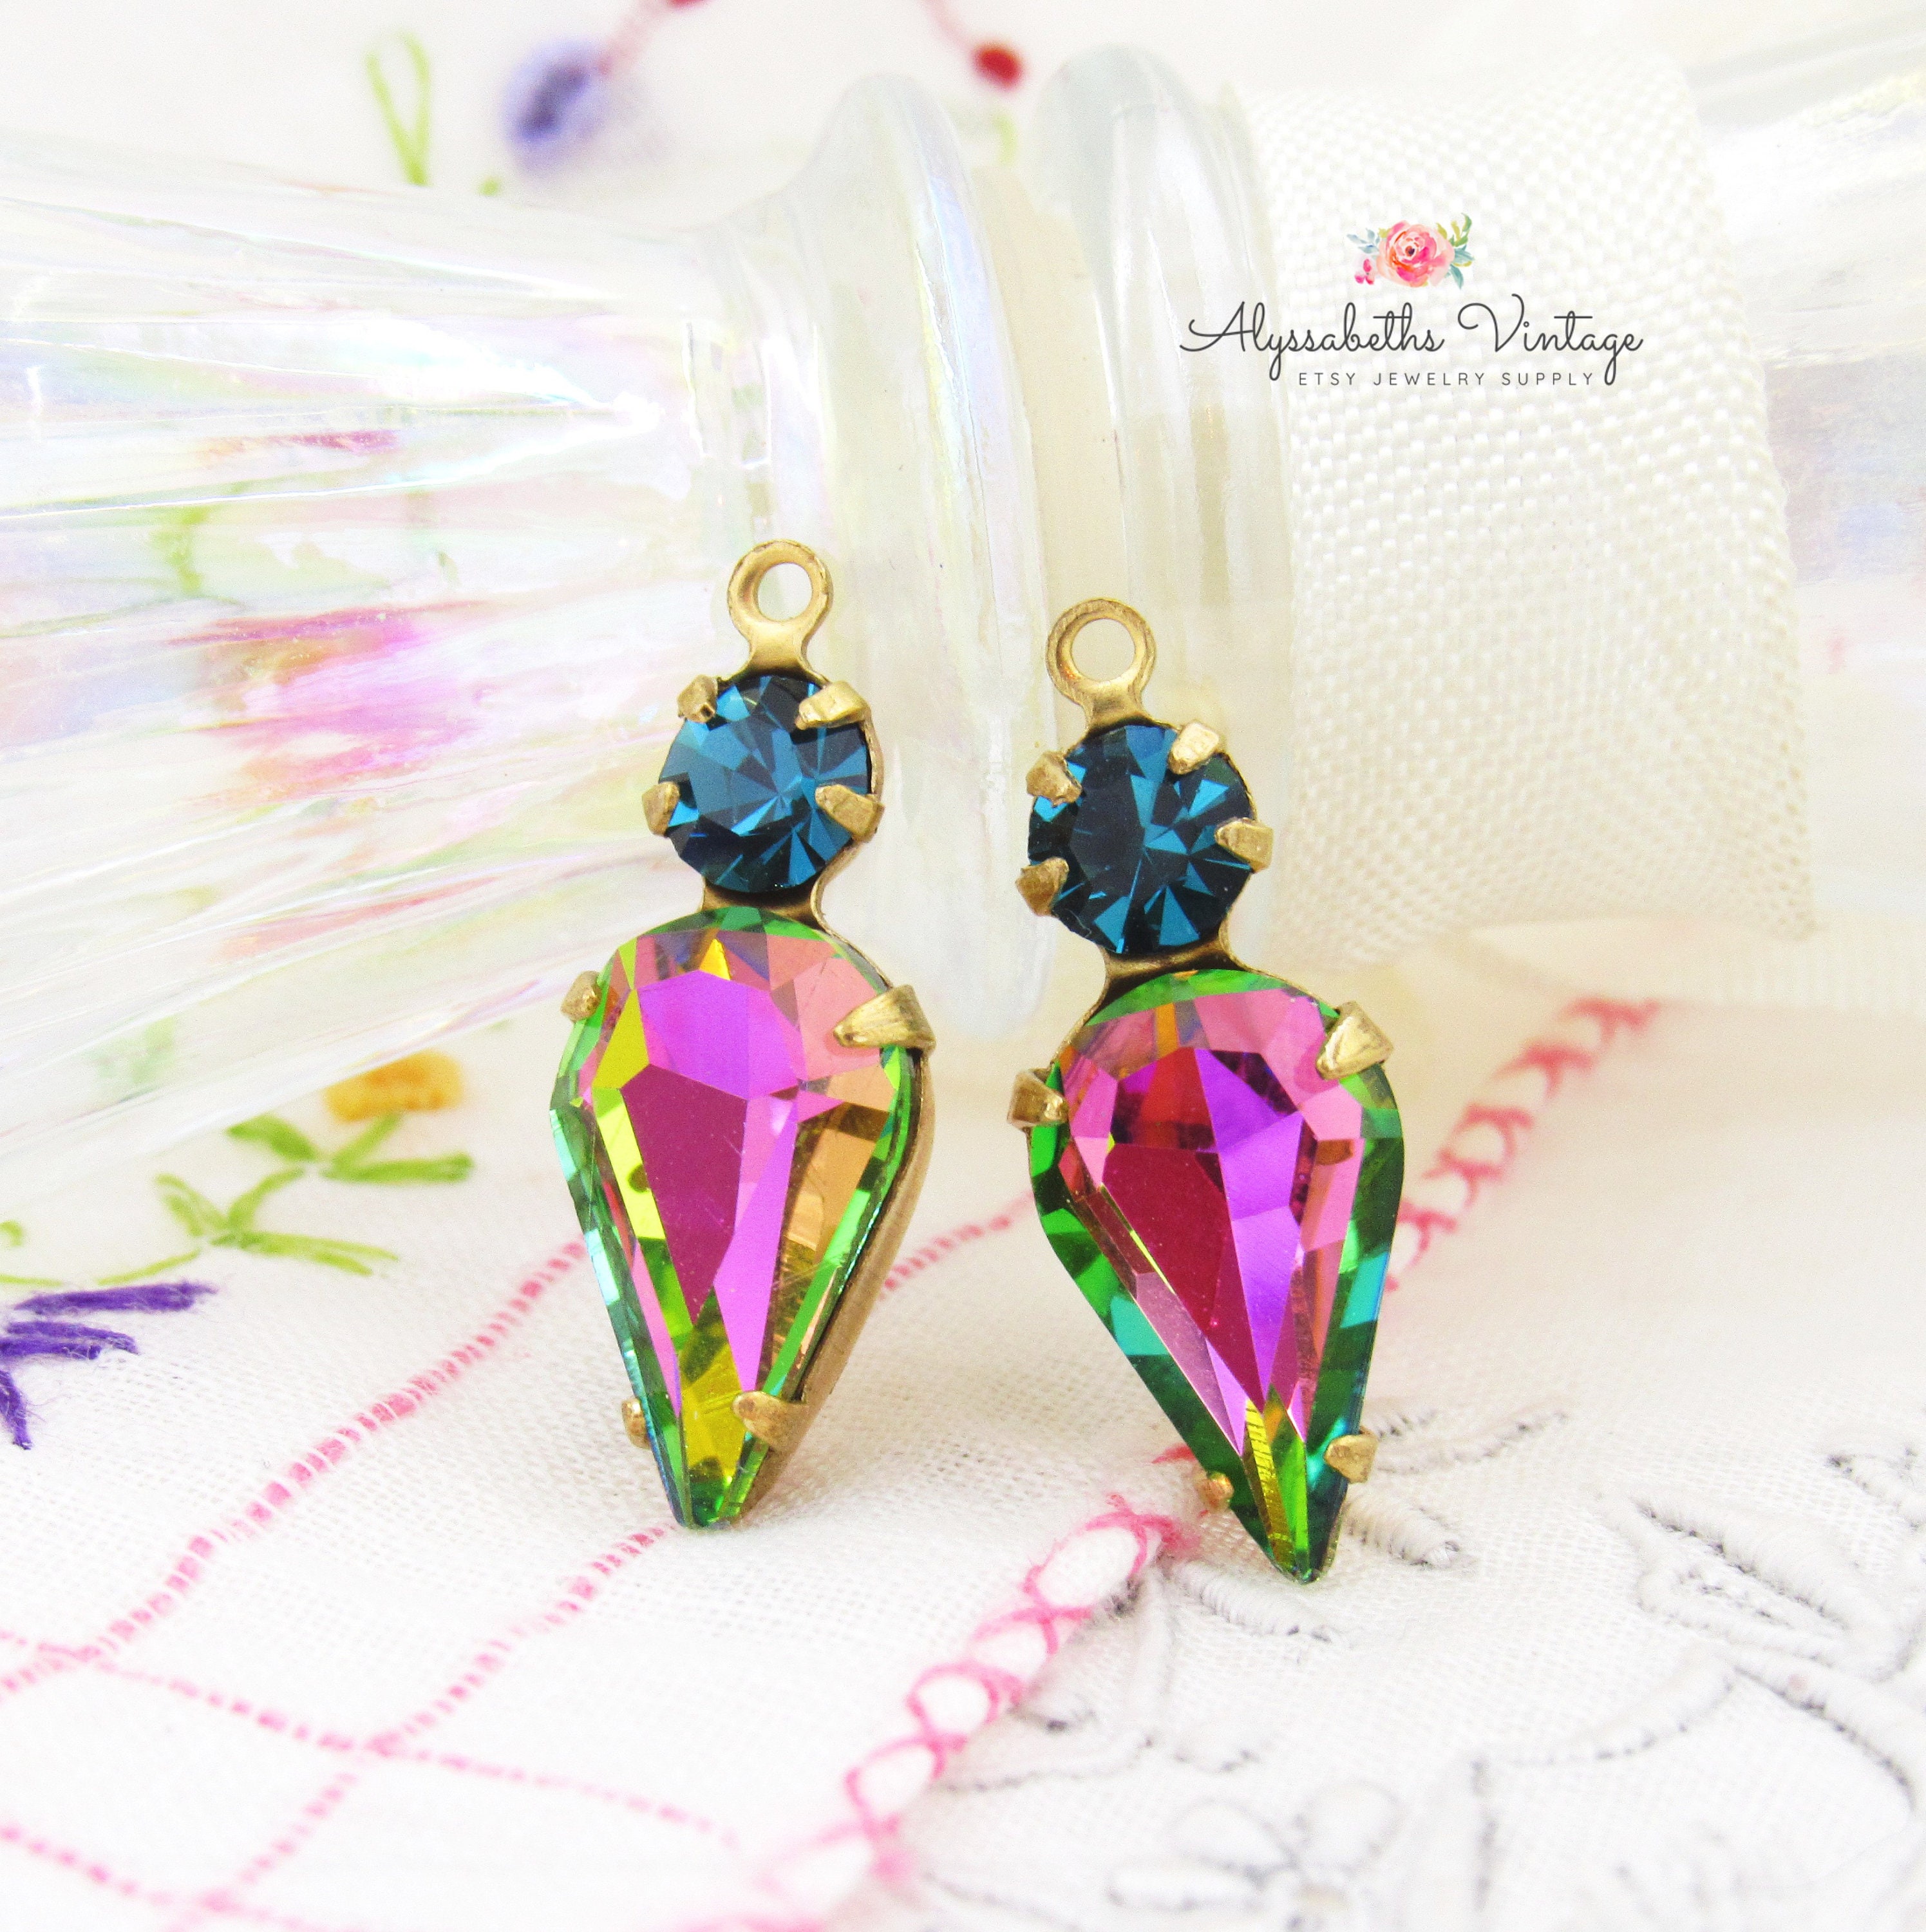 Anvazise 1 Pair Drop Earrings Cherry Rhinestones Jewelry Long Tassel Floral  Dangle Earrings Birthday Gift style B 